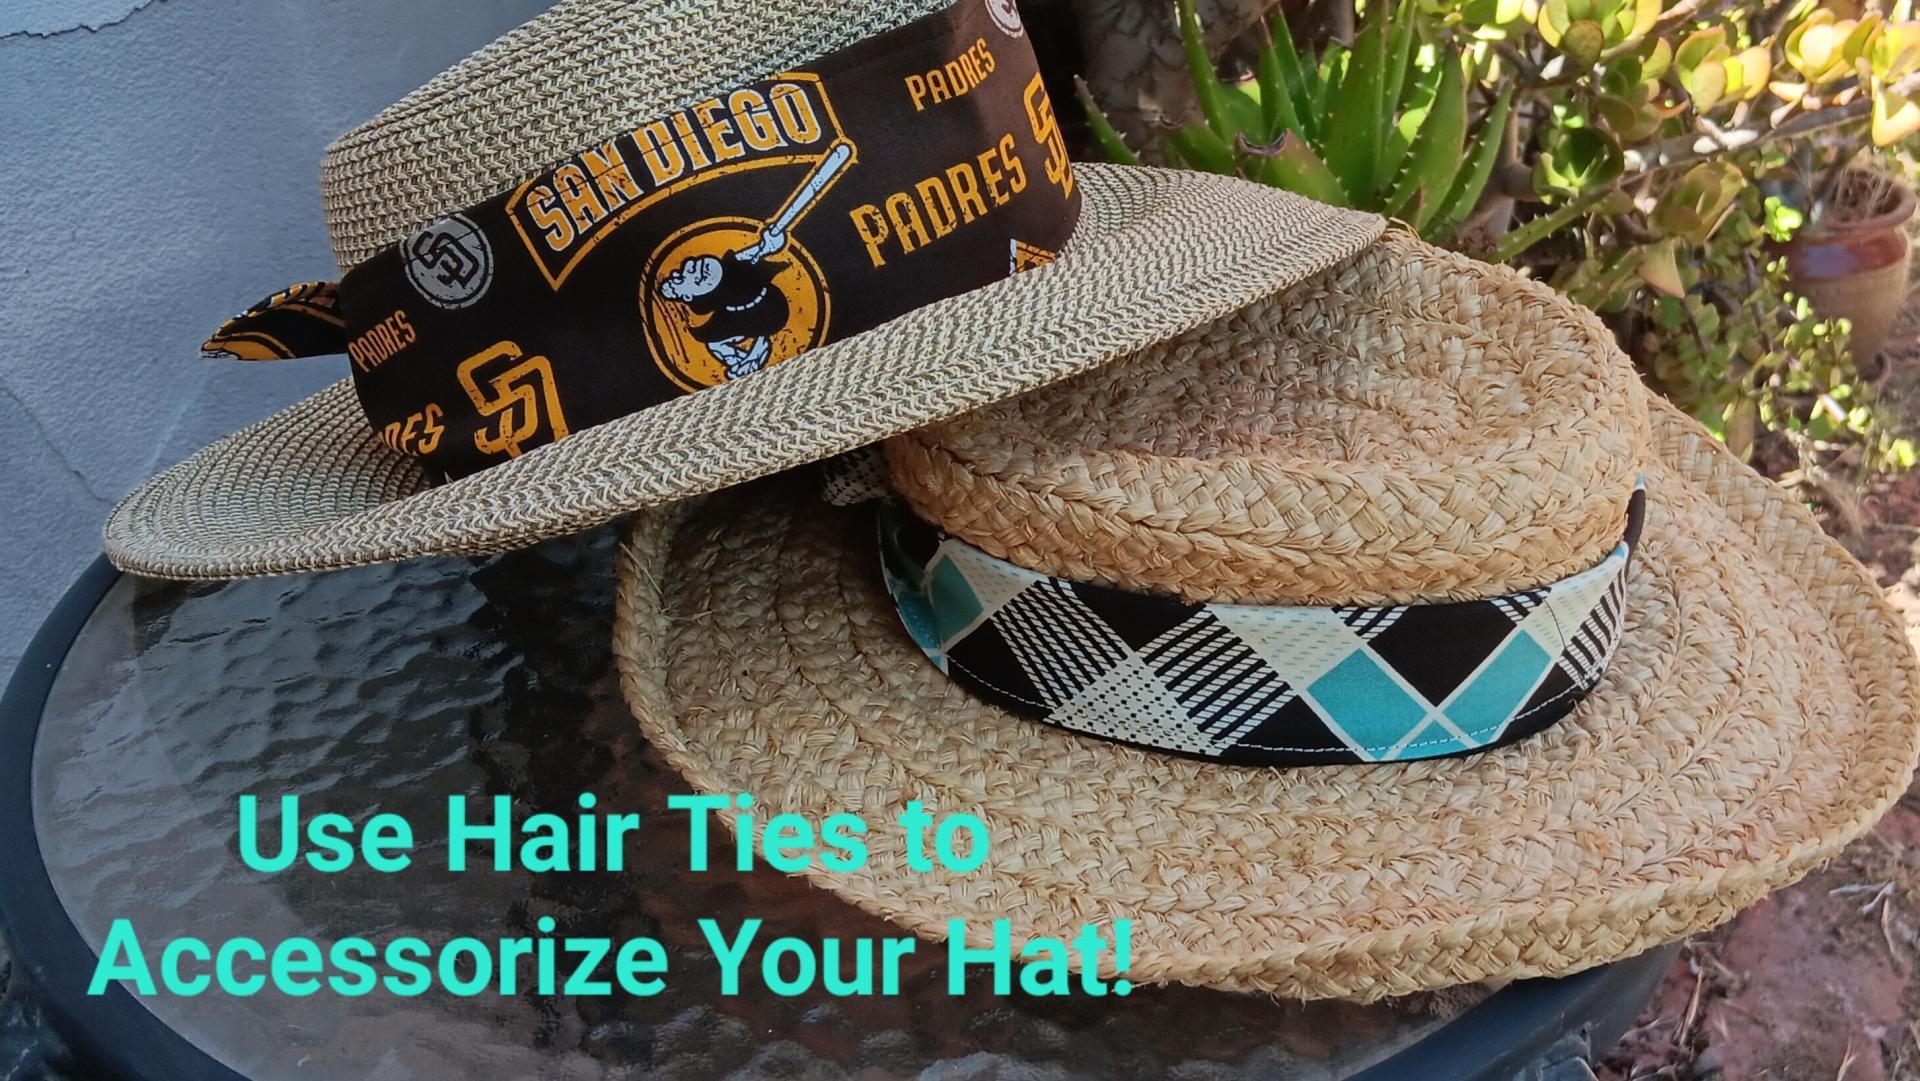 3” Wide Minnesota Twins headband, self tie, baseball, pin up style, hair wrap, hair tie, retro style, handmade